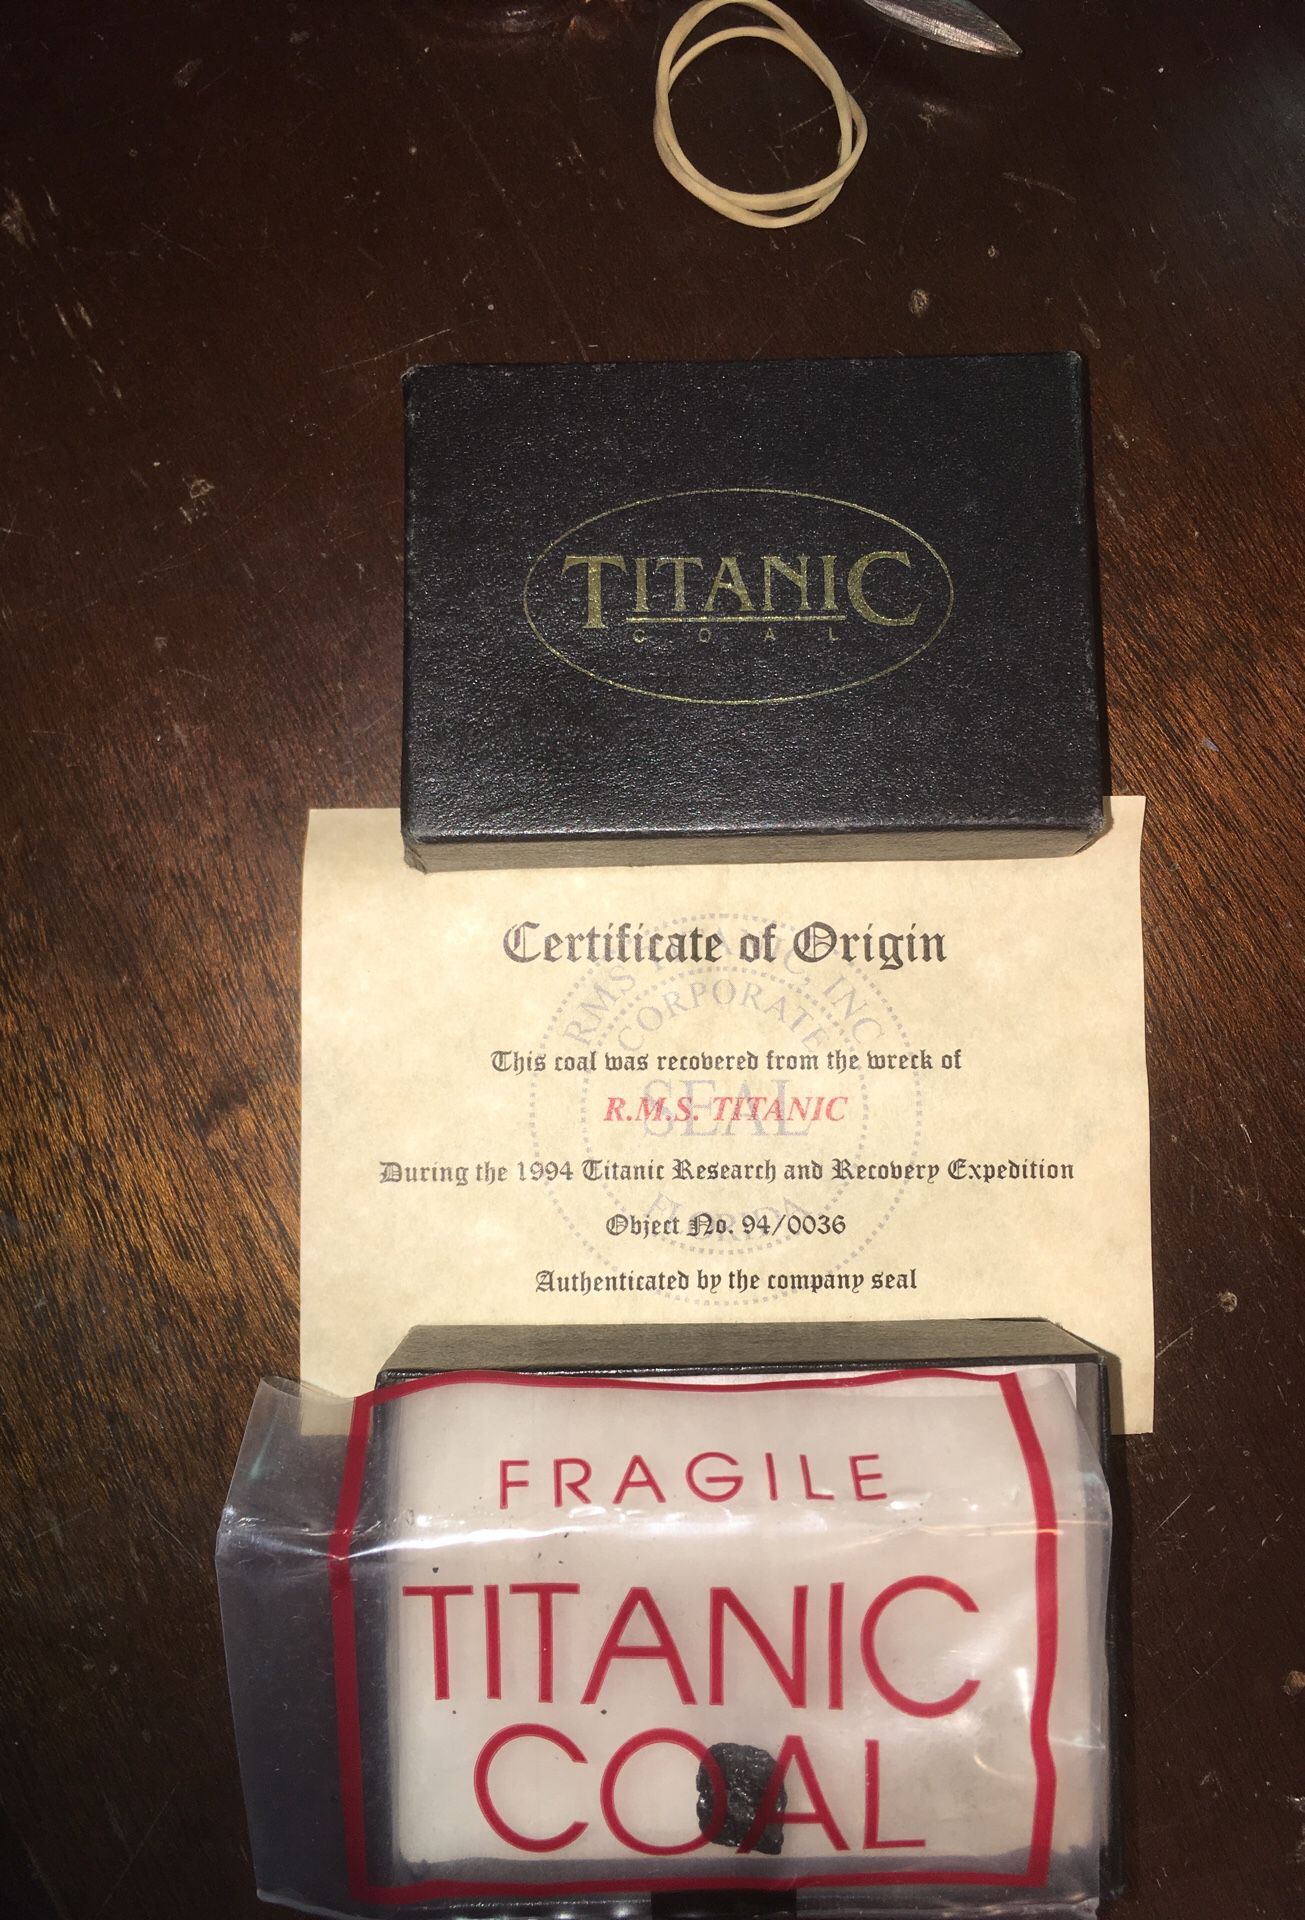 Authentic Titanic Coal from 1994